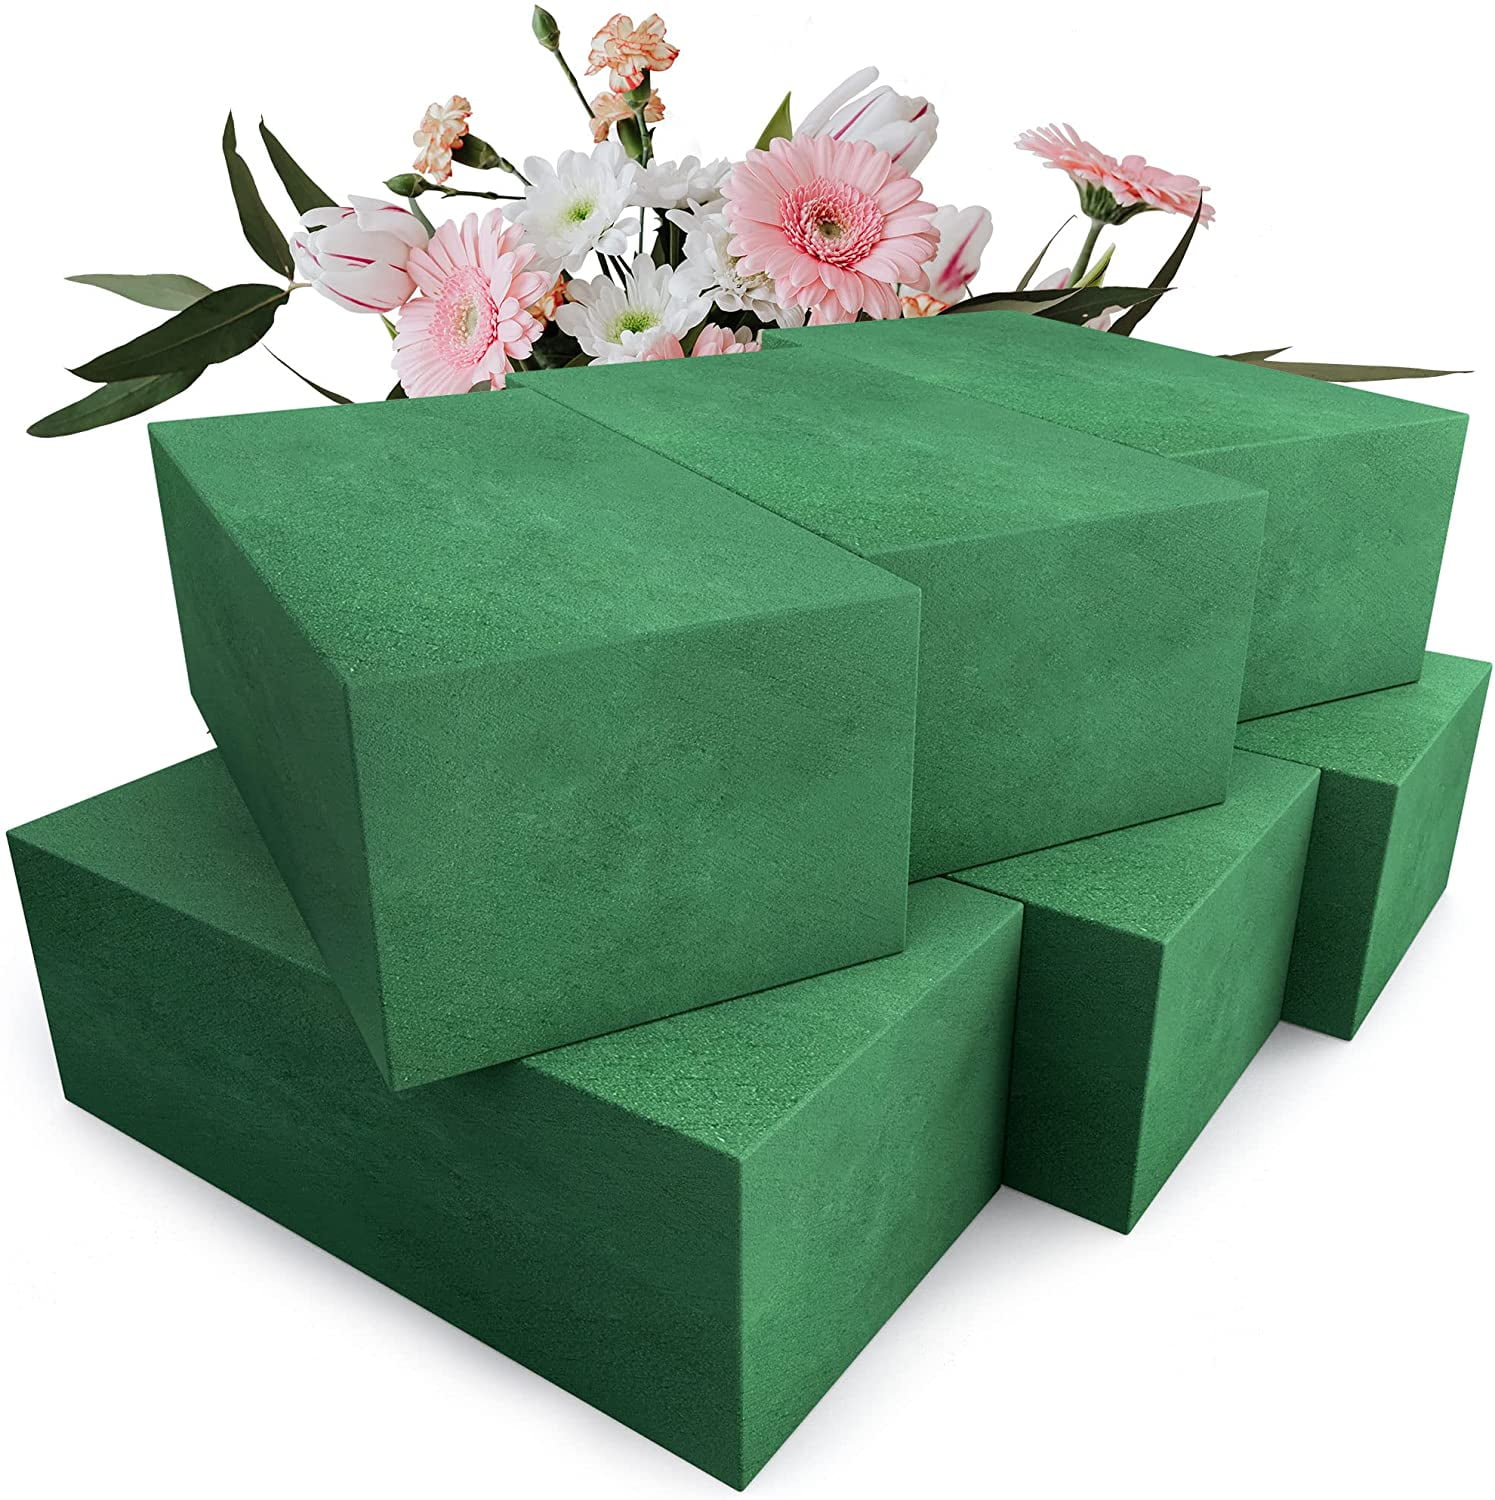 NOGIS 4 Packs Floral Foam Bricks Wet Floral Foam Blocks for Artificial  Flower and Fresh Flower Arrangements Kit, Green Florist Styrofoam Blocks  for